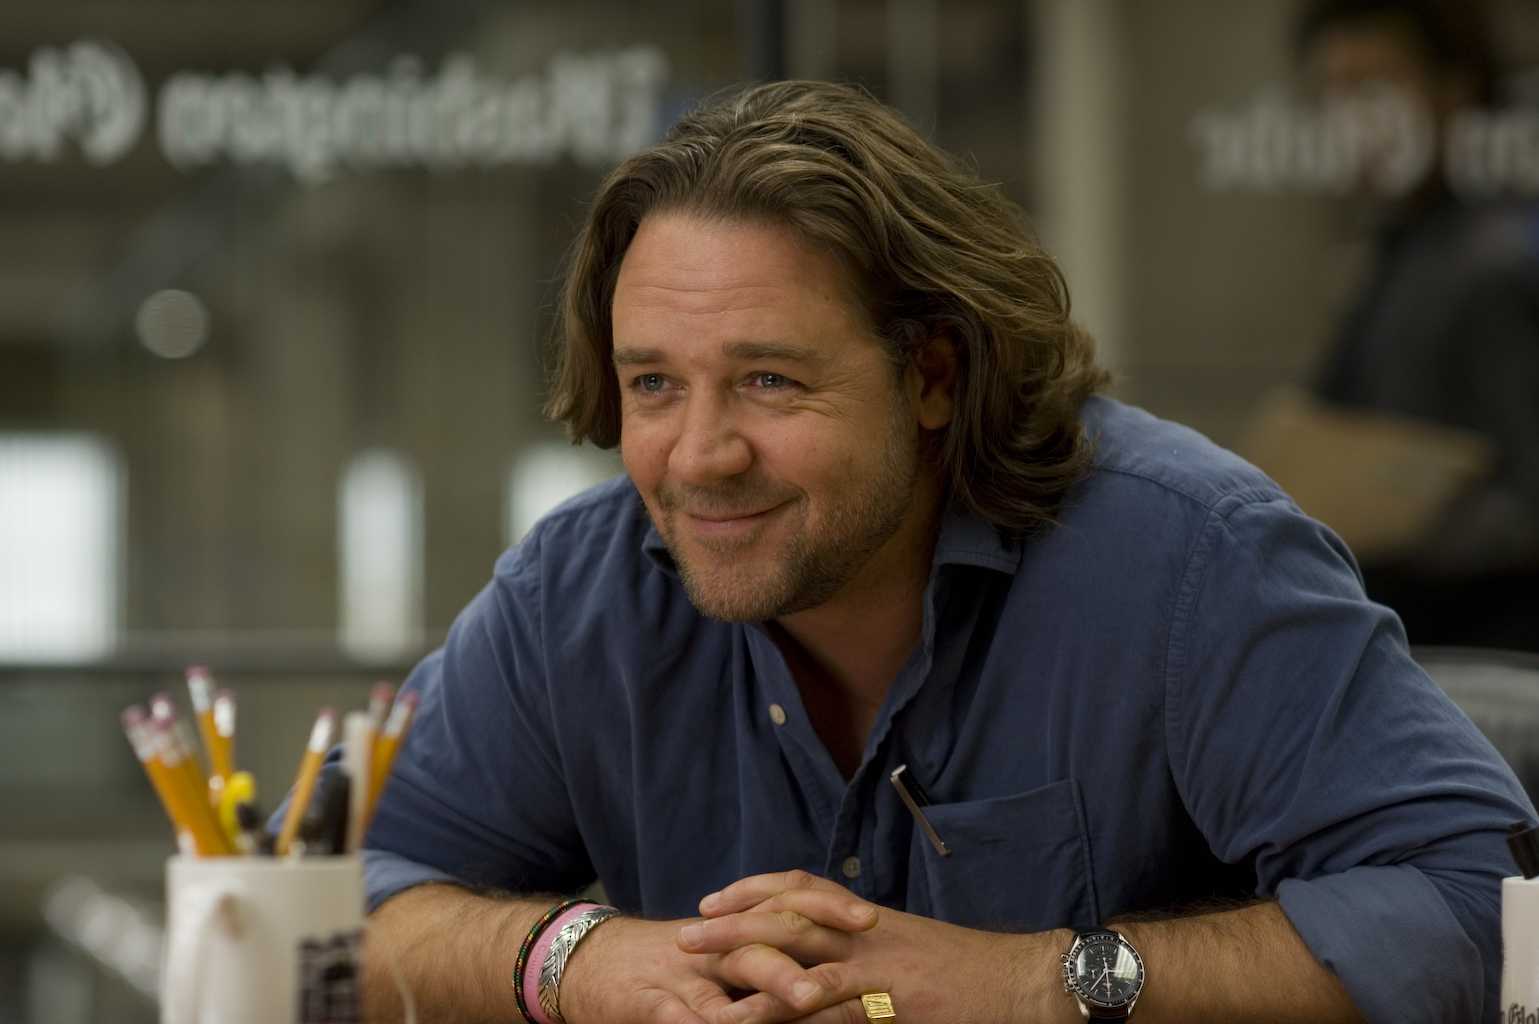 Russell Crowe To Star Alongside Mark Wahlberg In 'Broken City'